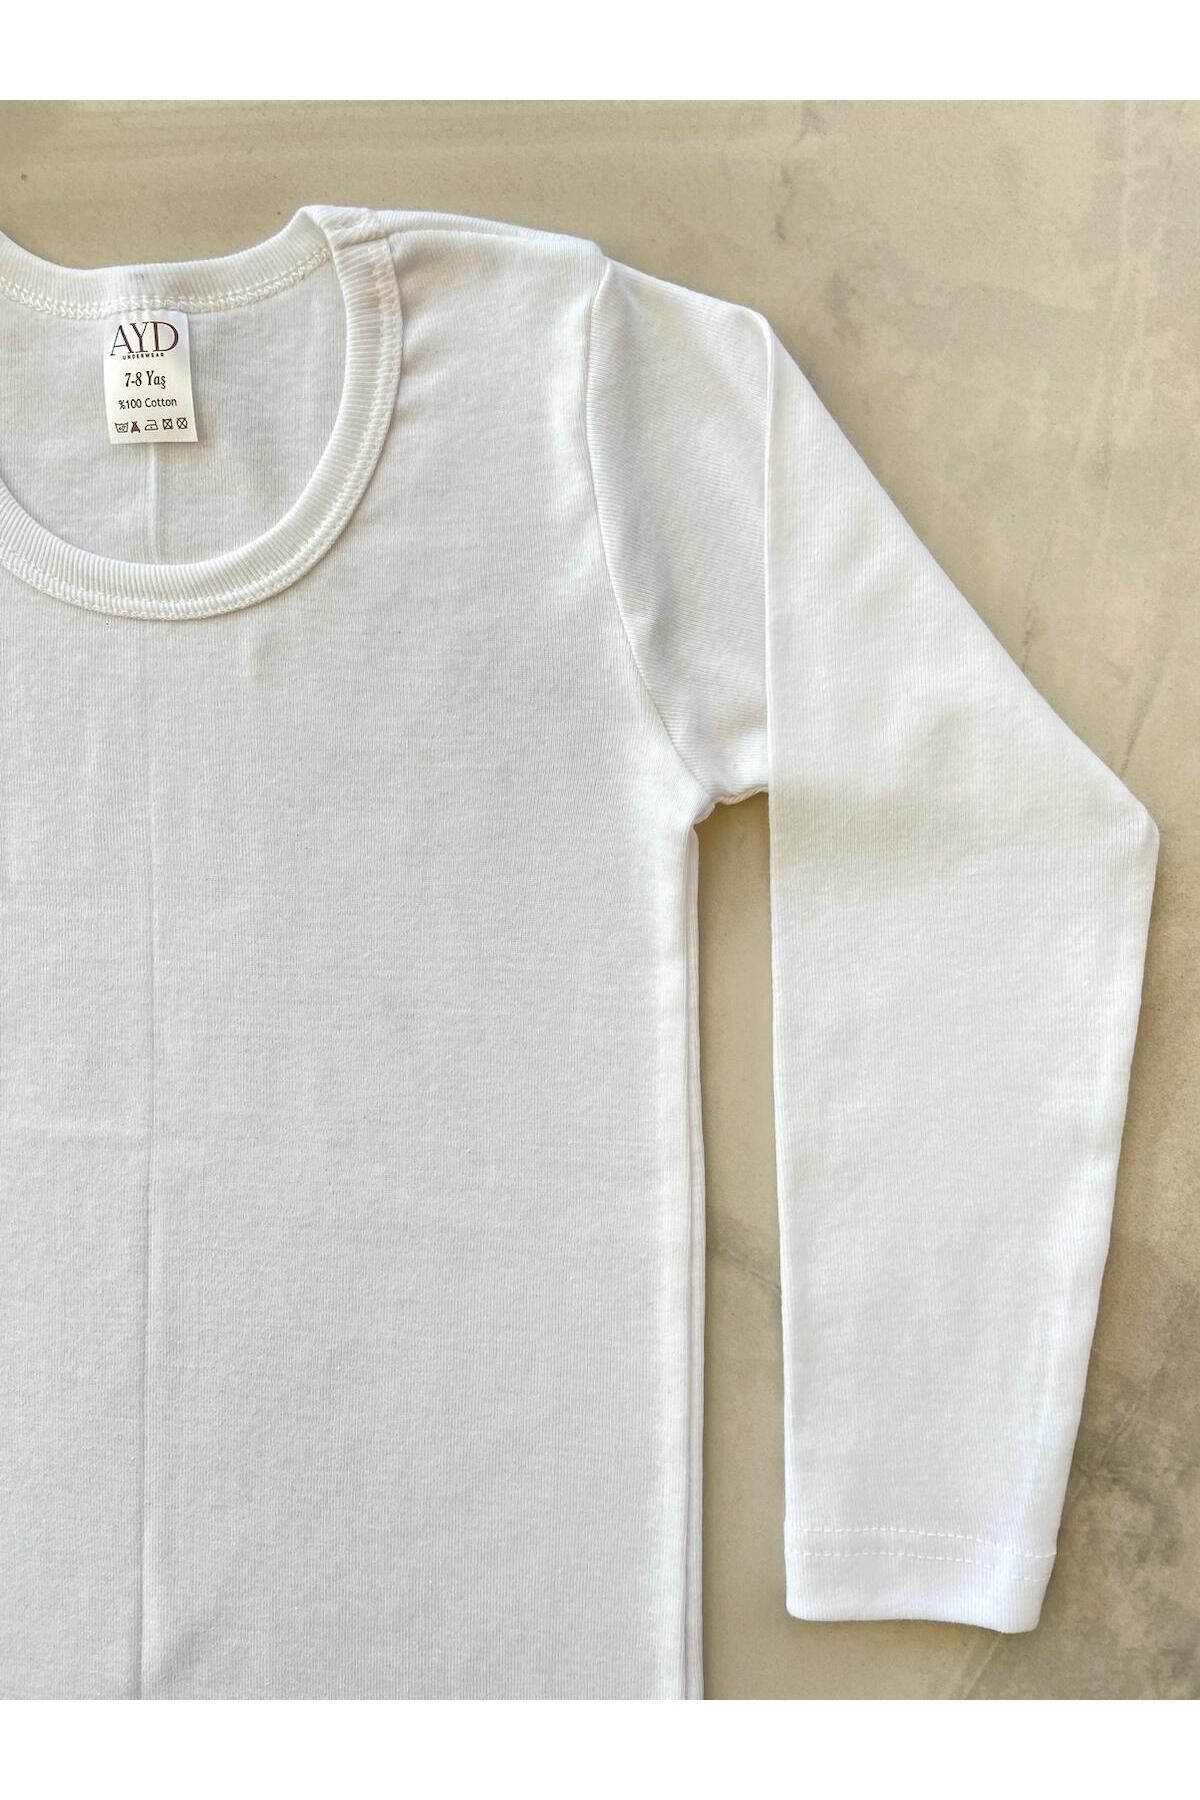 AYD UNDERWEAR Erkek / Kız %100 Pamuk 2'li Siyah Beyaz Uzun Kollu Basic T-shirt